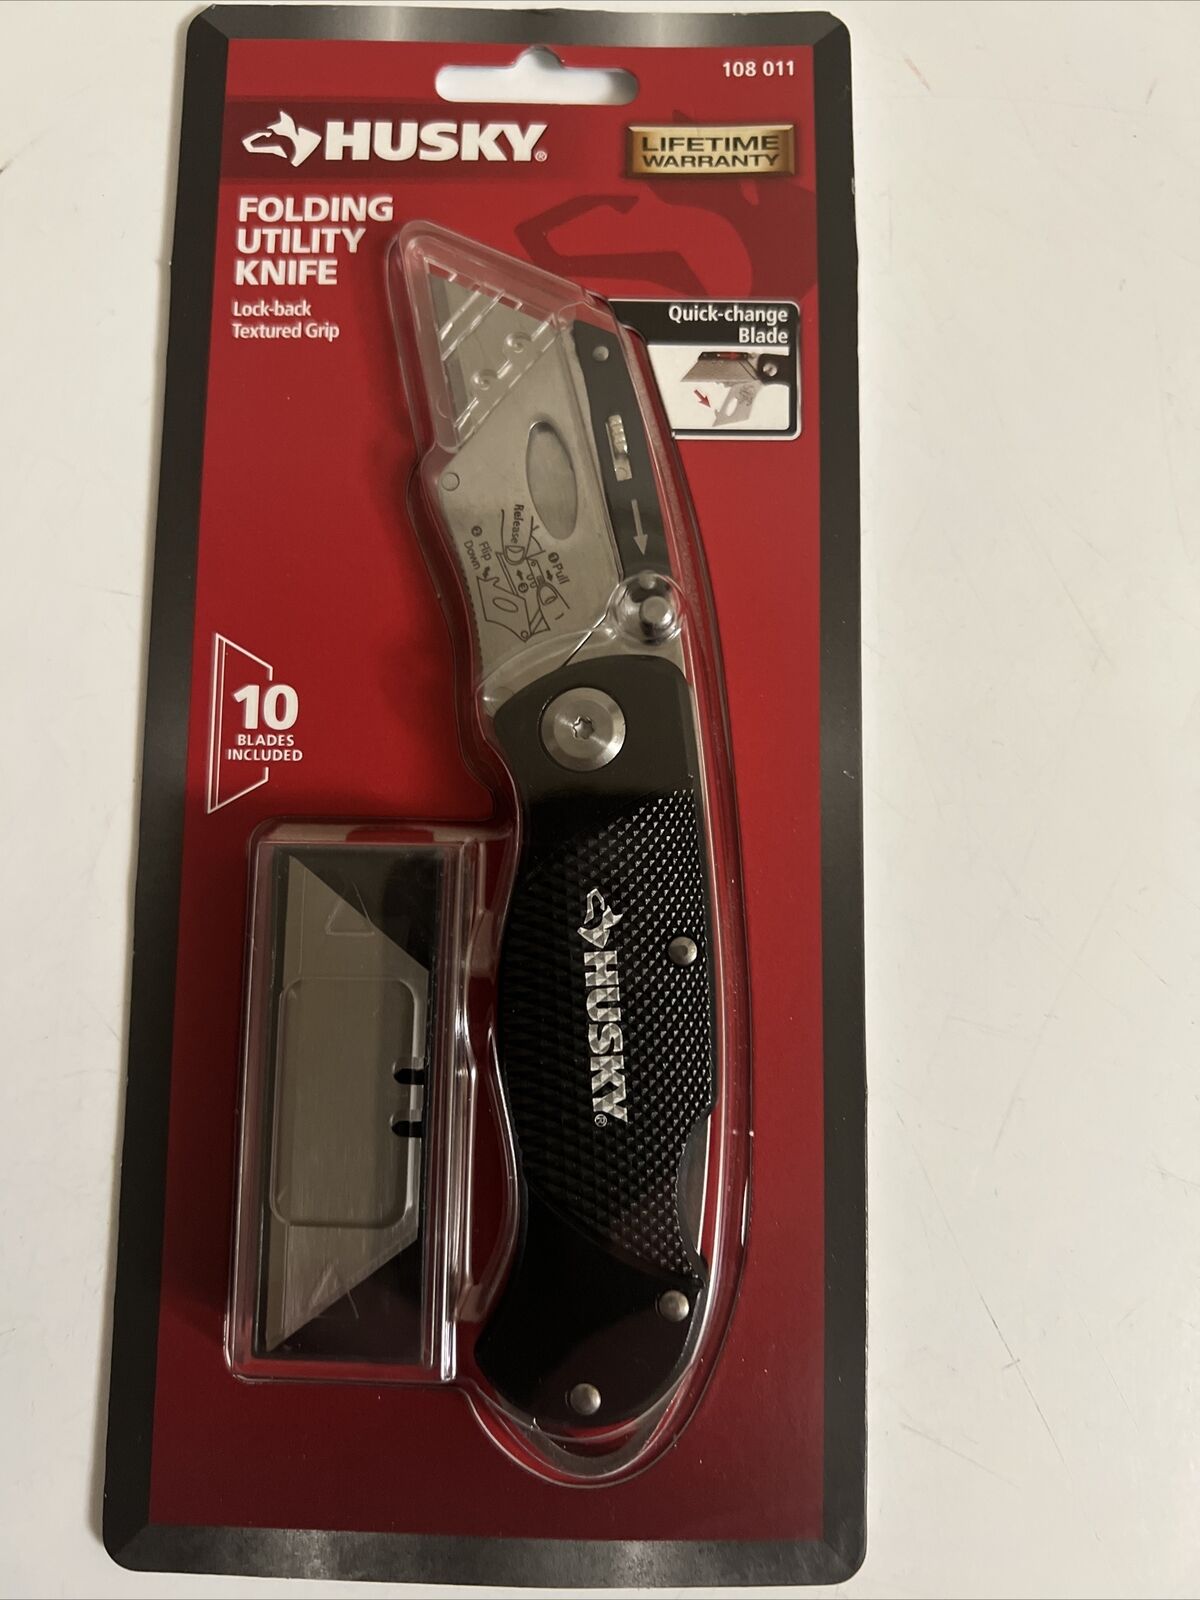 Husky Folding Utility Knife Lock Back Textured Grip # 108011, 10